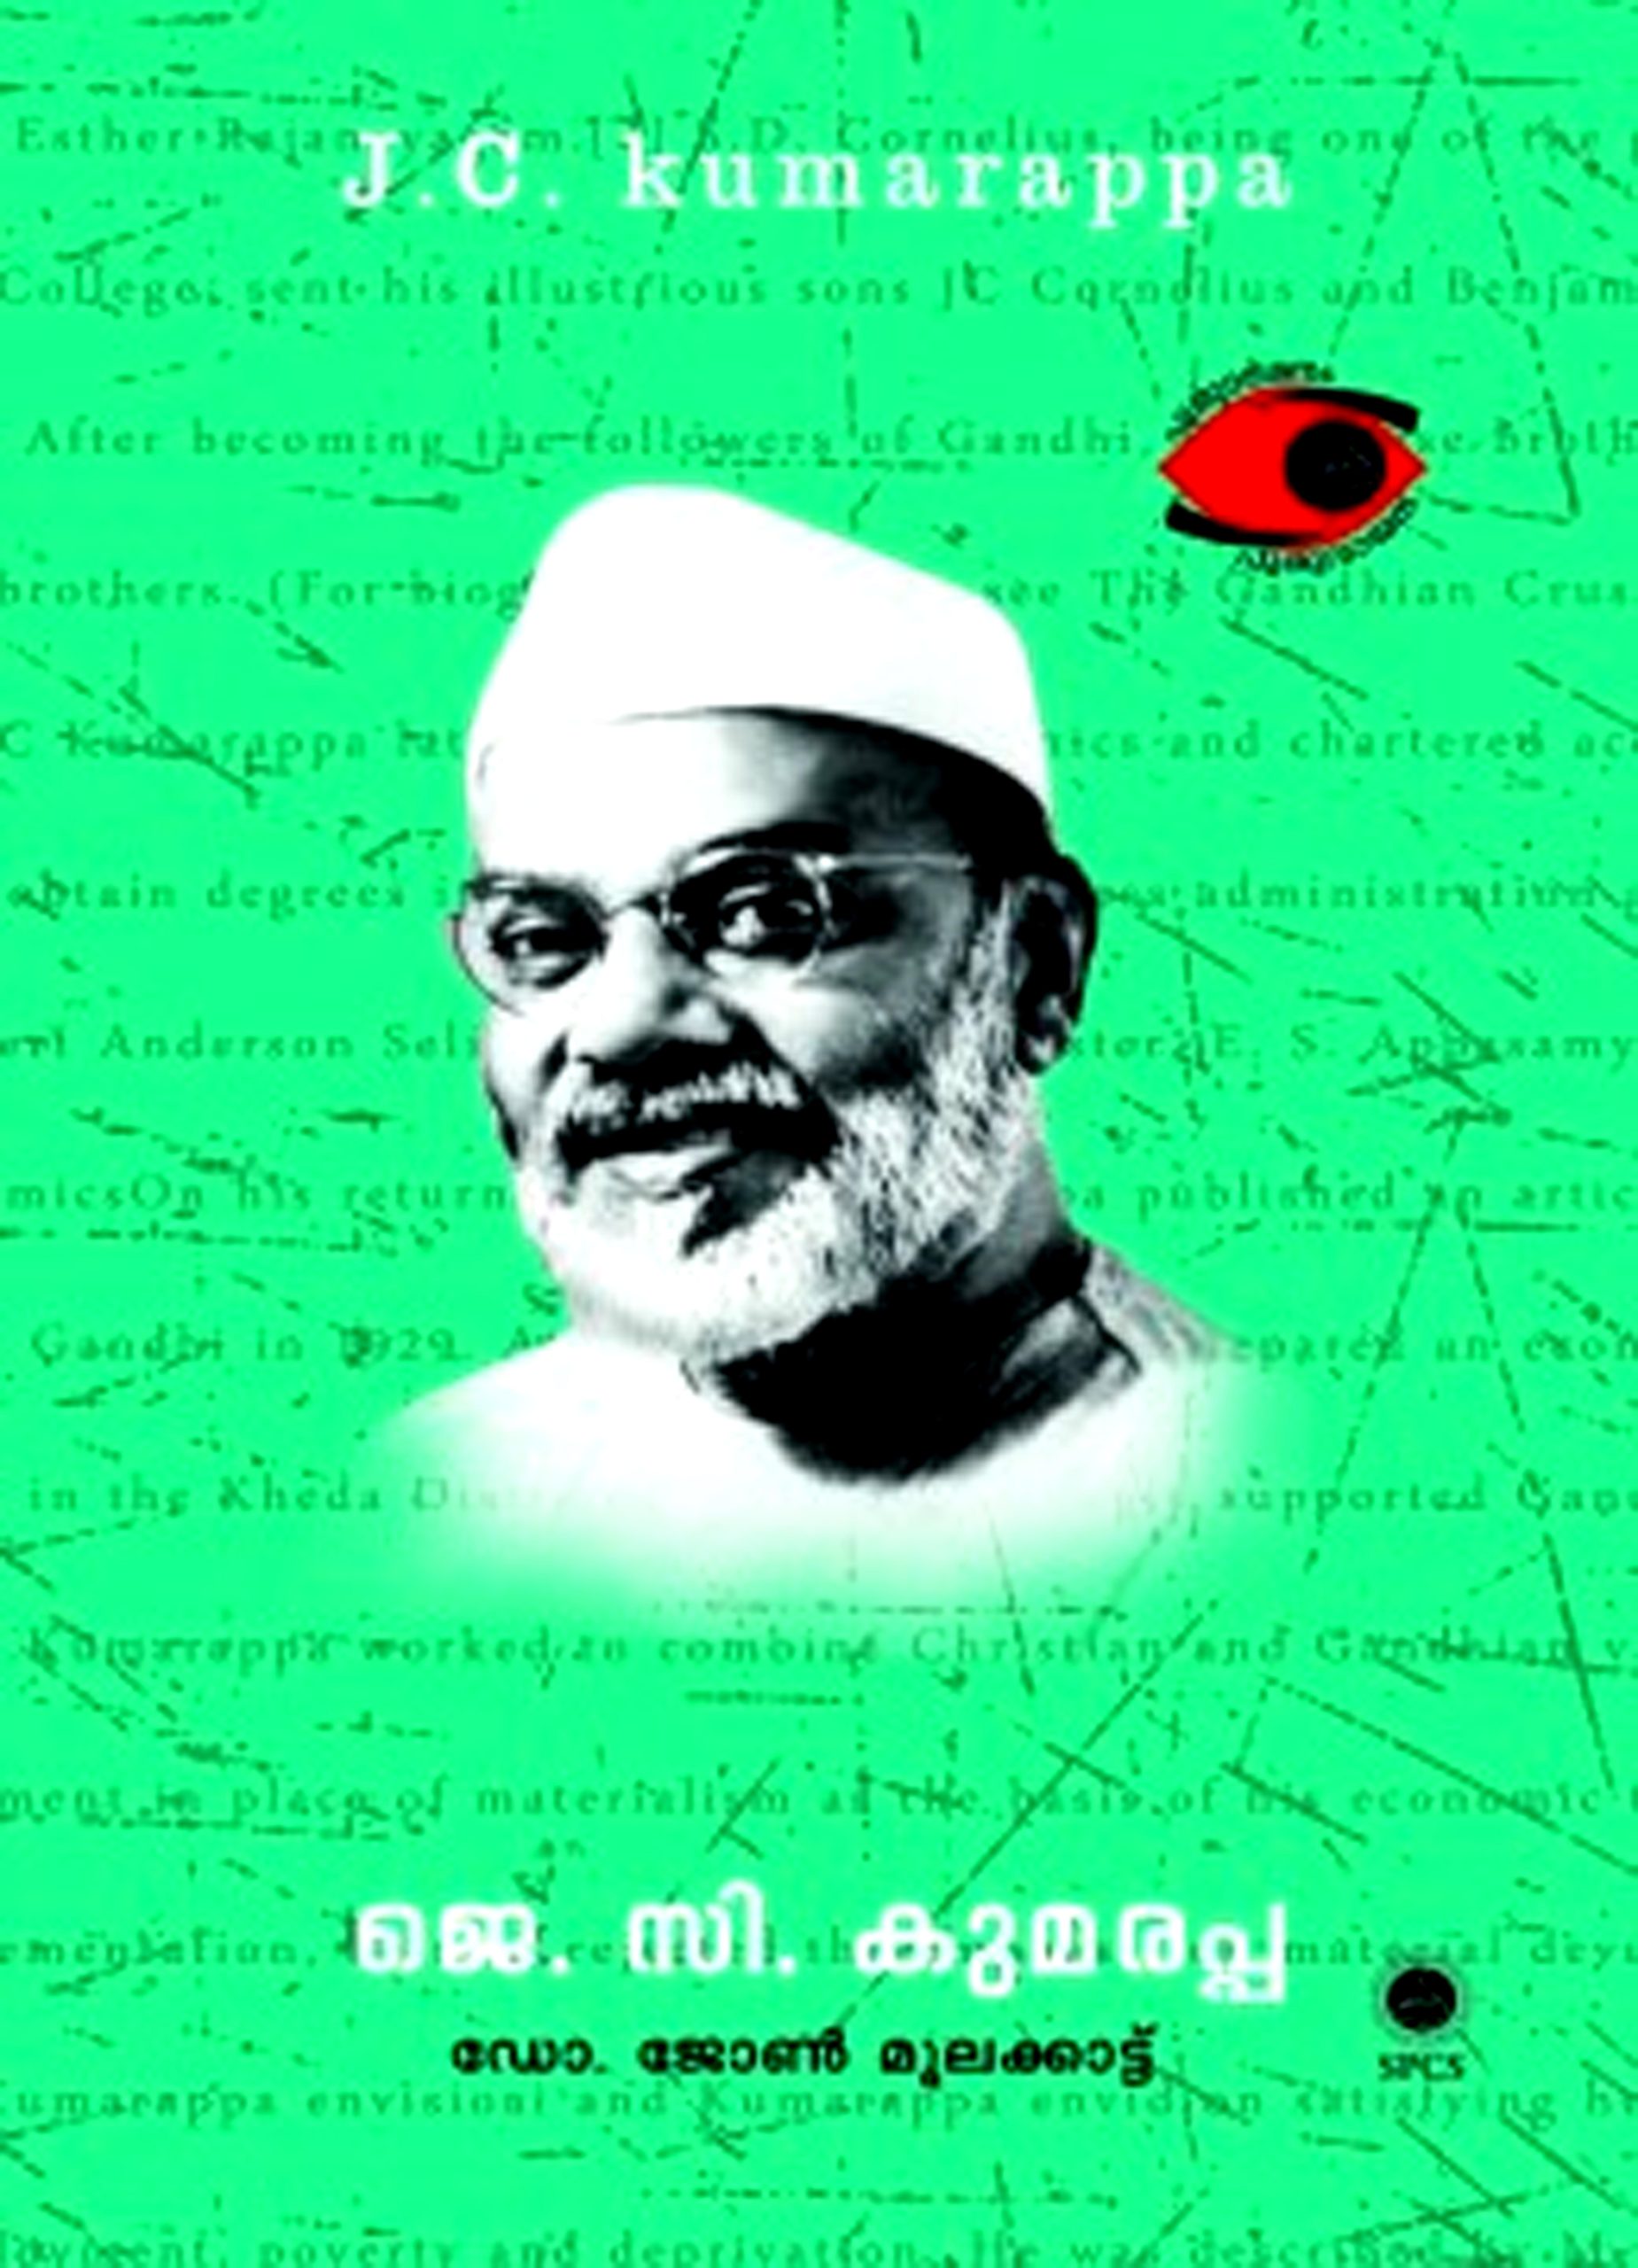 J. C.Kumarappa